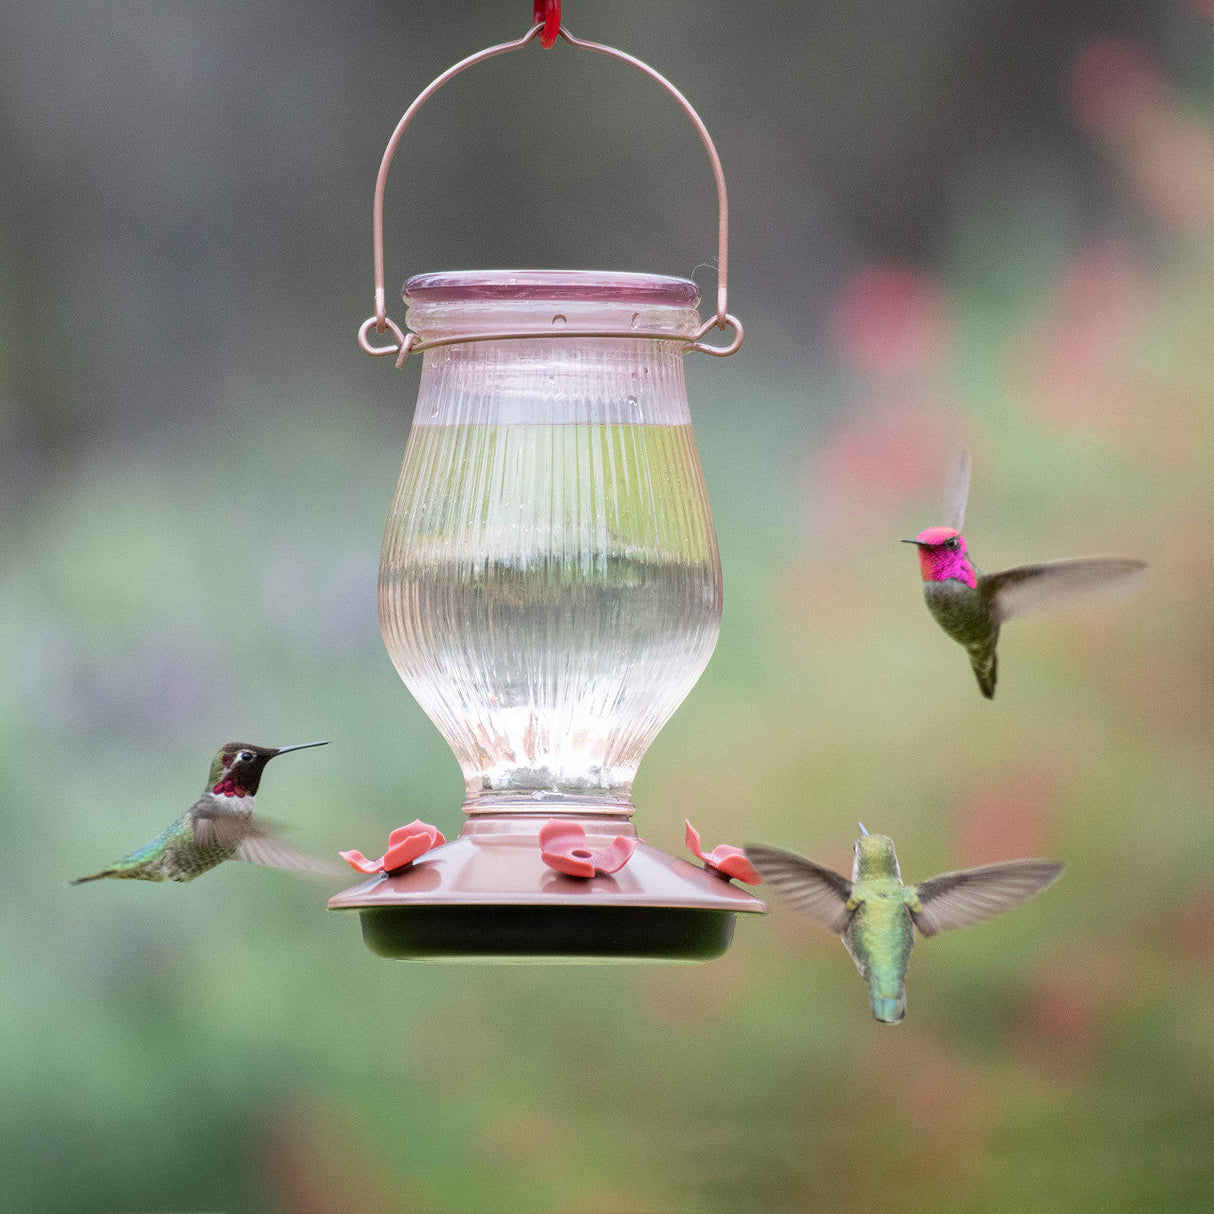 Perky-Pet Rose Gold Top-Fill Glass Hummingbird Feeder 24 oz - JCS Wildlife